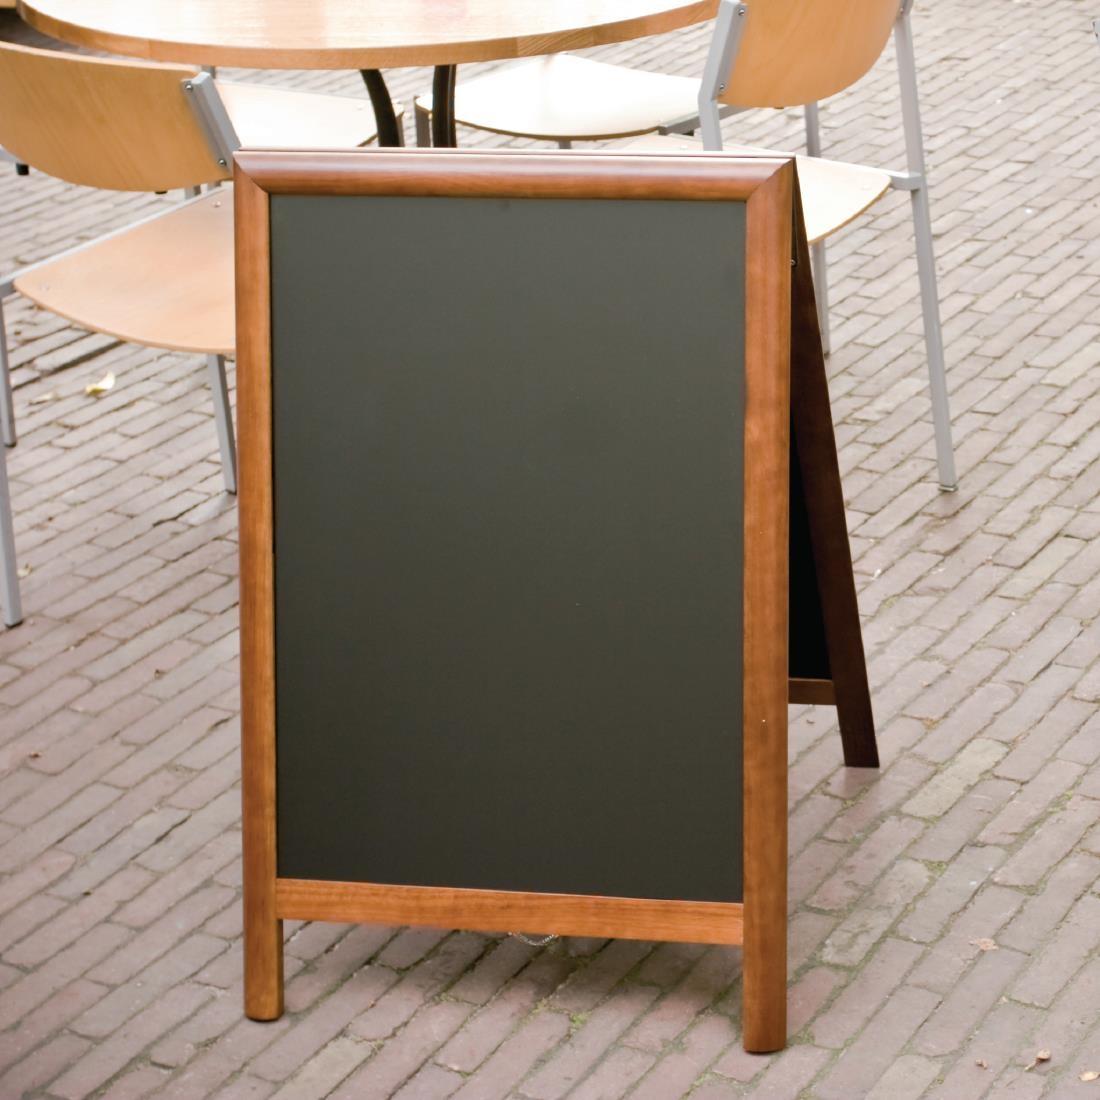 Securit Duplo Pavement Board 850 x 550mm Dark Wood - CE430  - 3